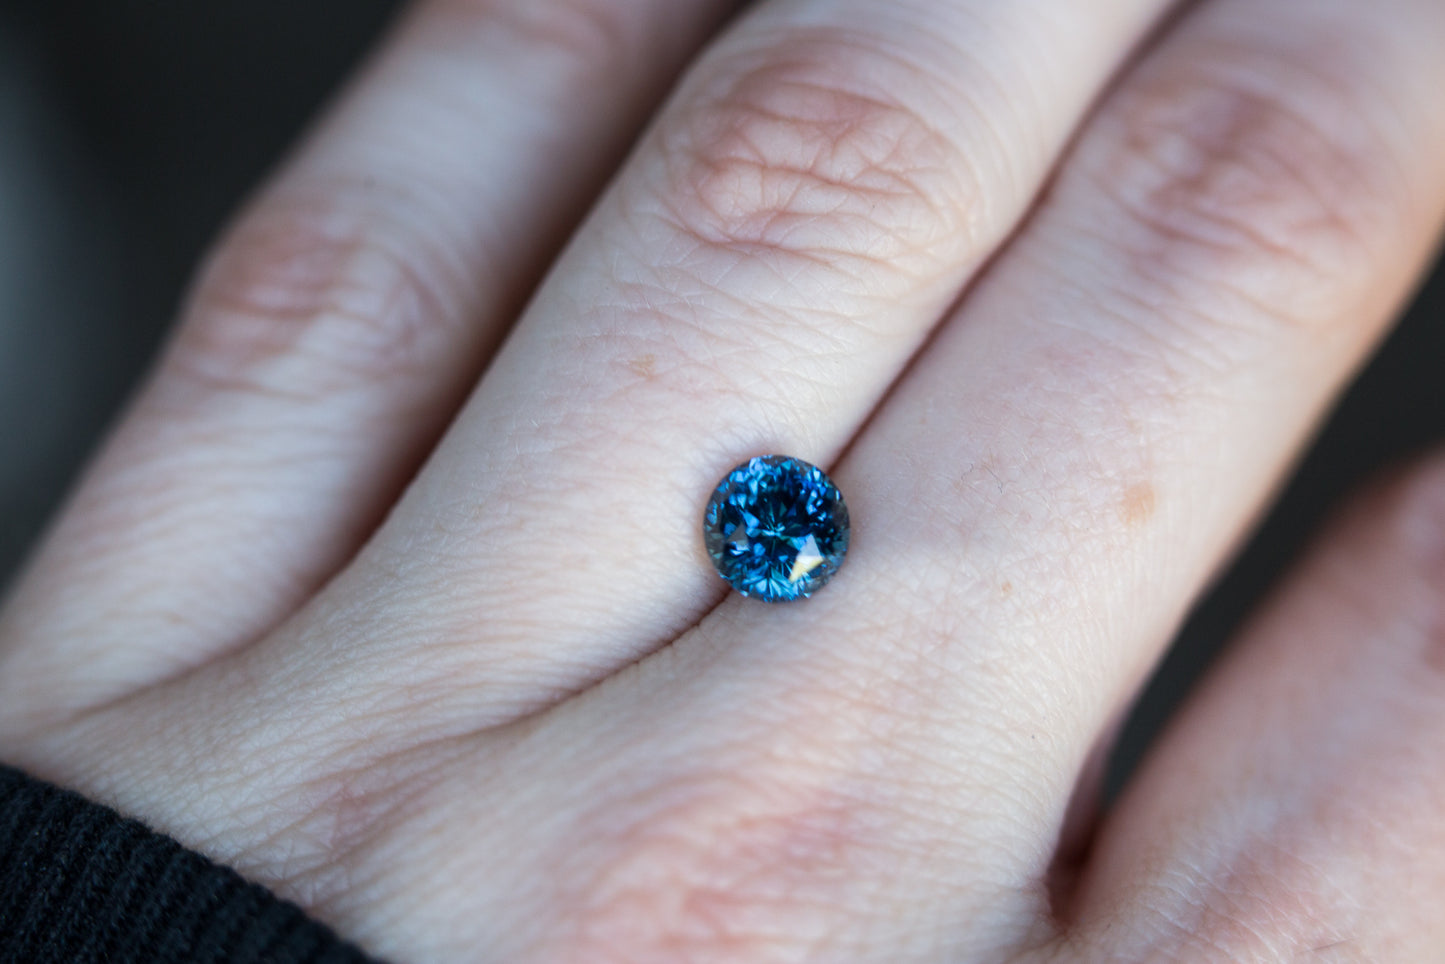 1.94ct blue/teal round sapphire